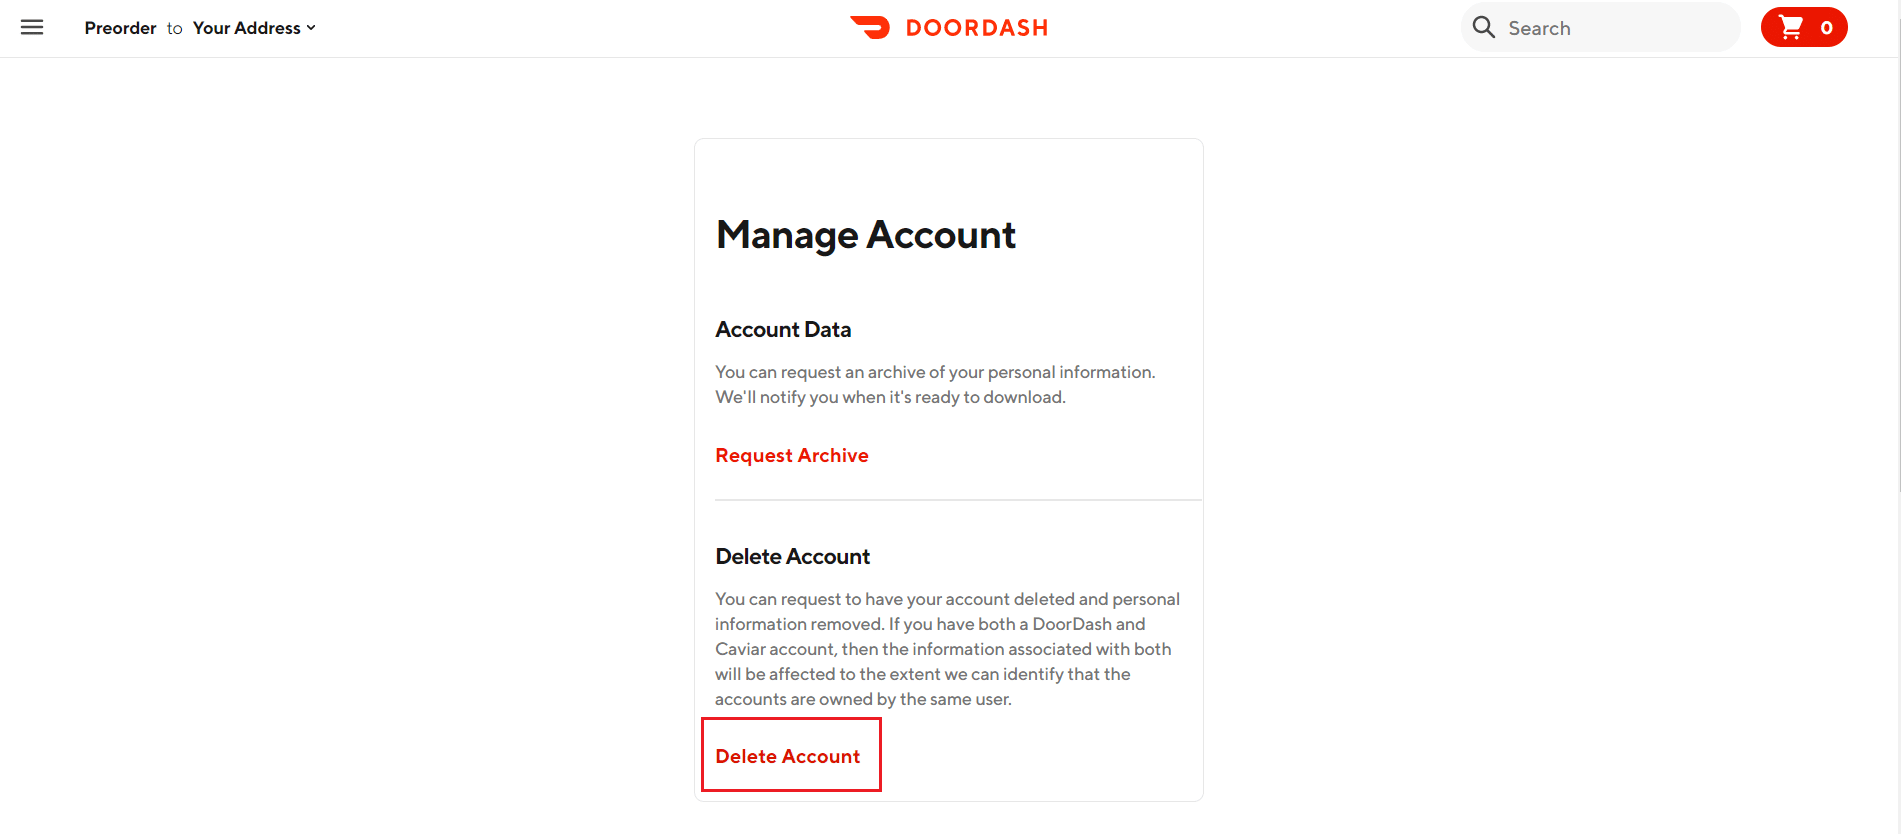 Delete Account in DoorDash Manage Account Page